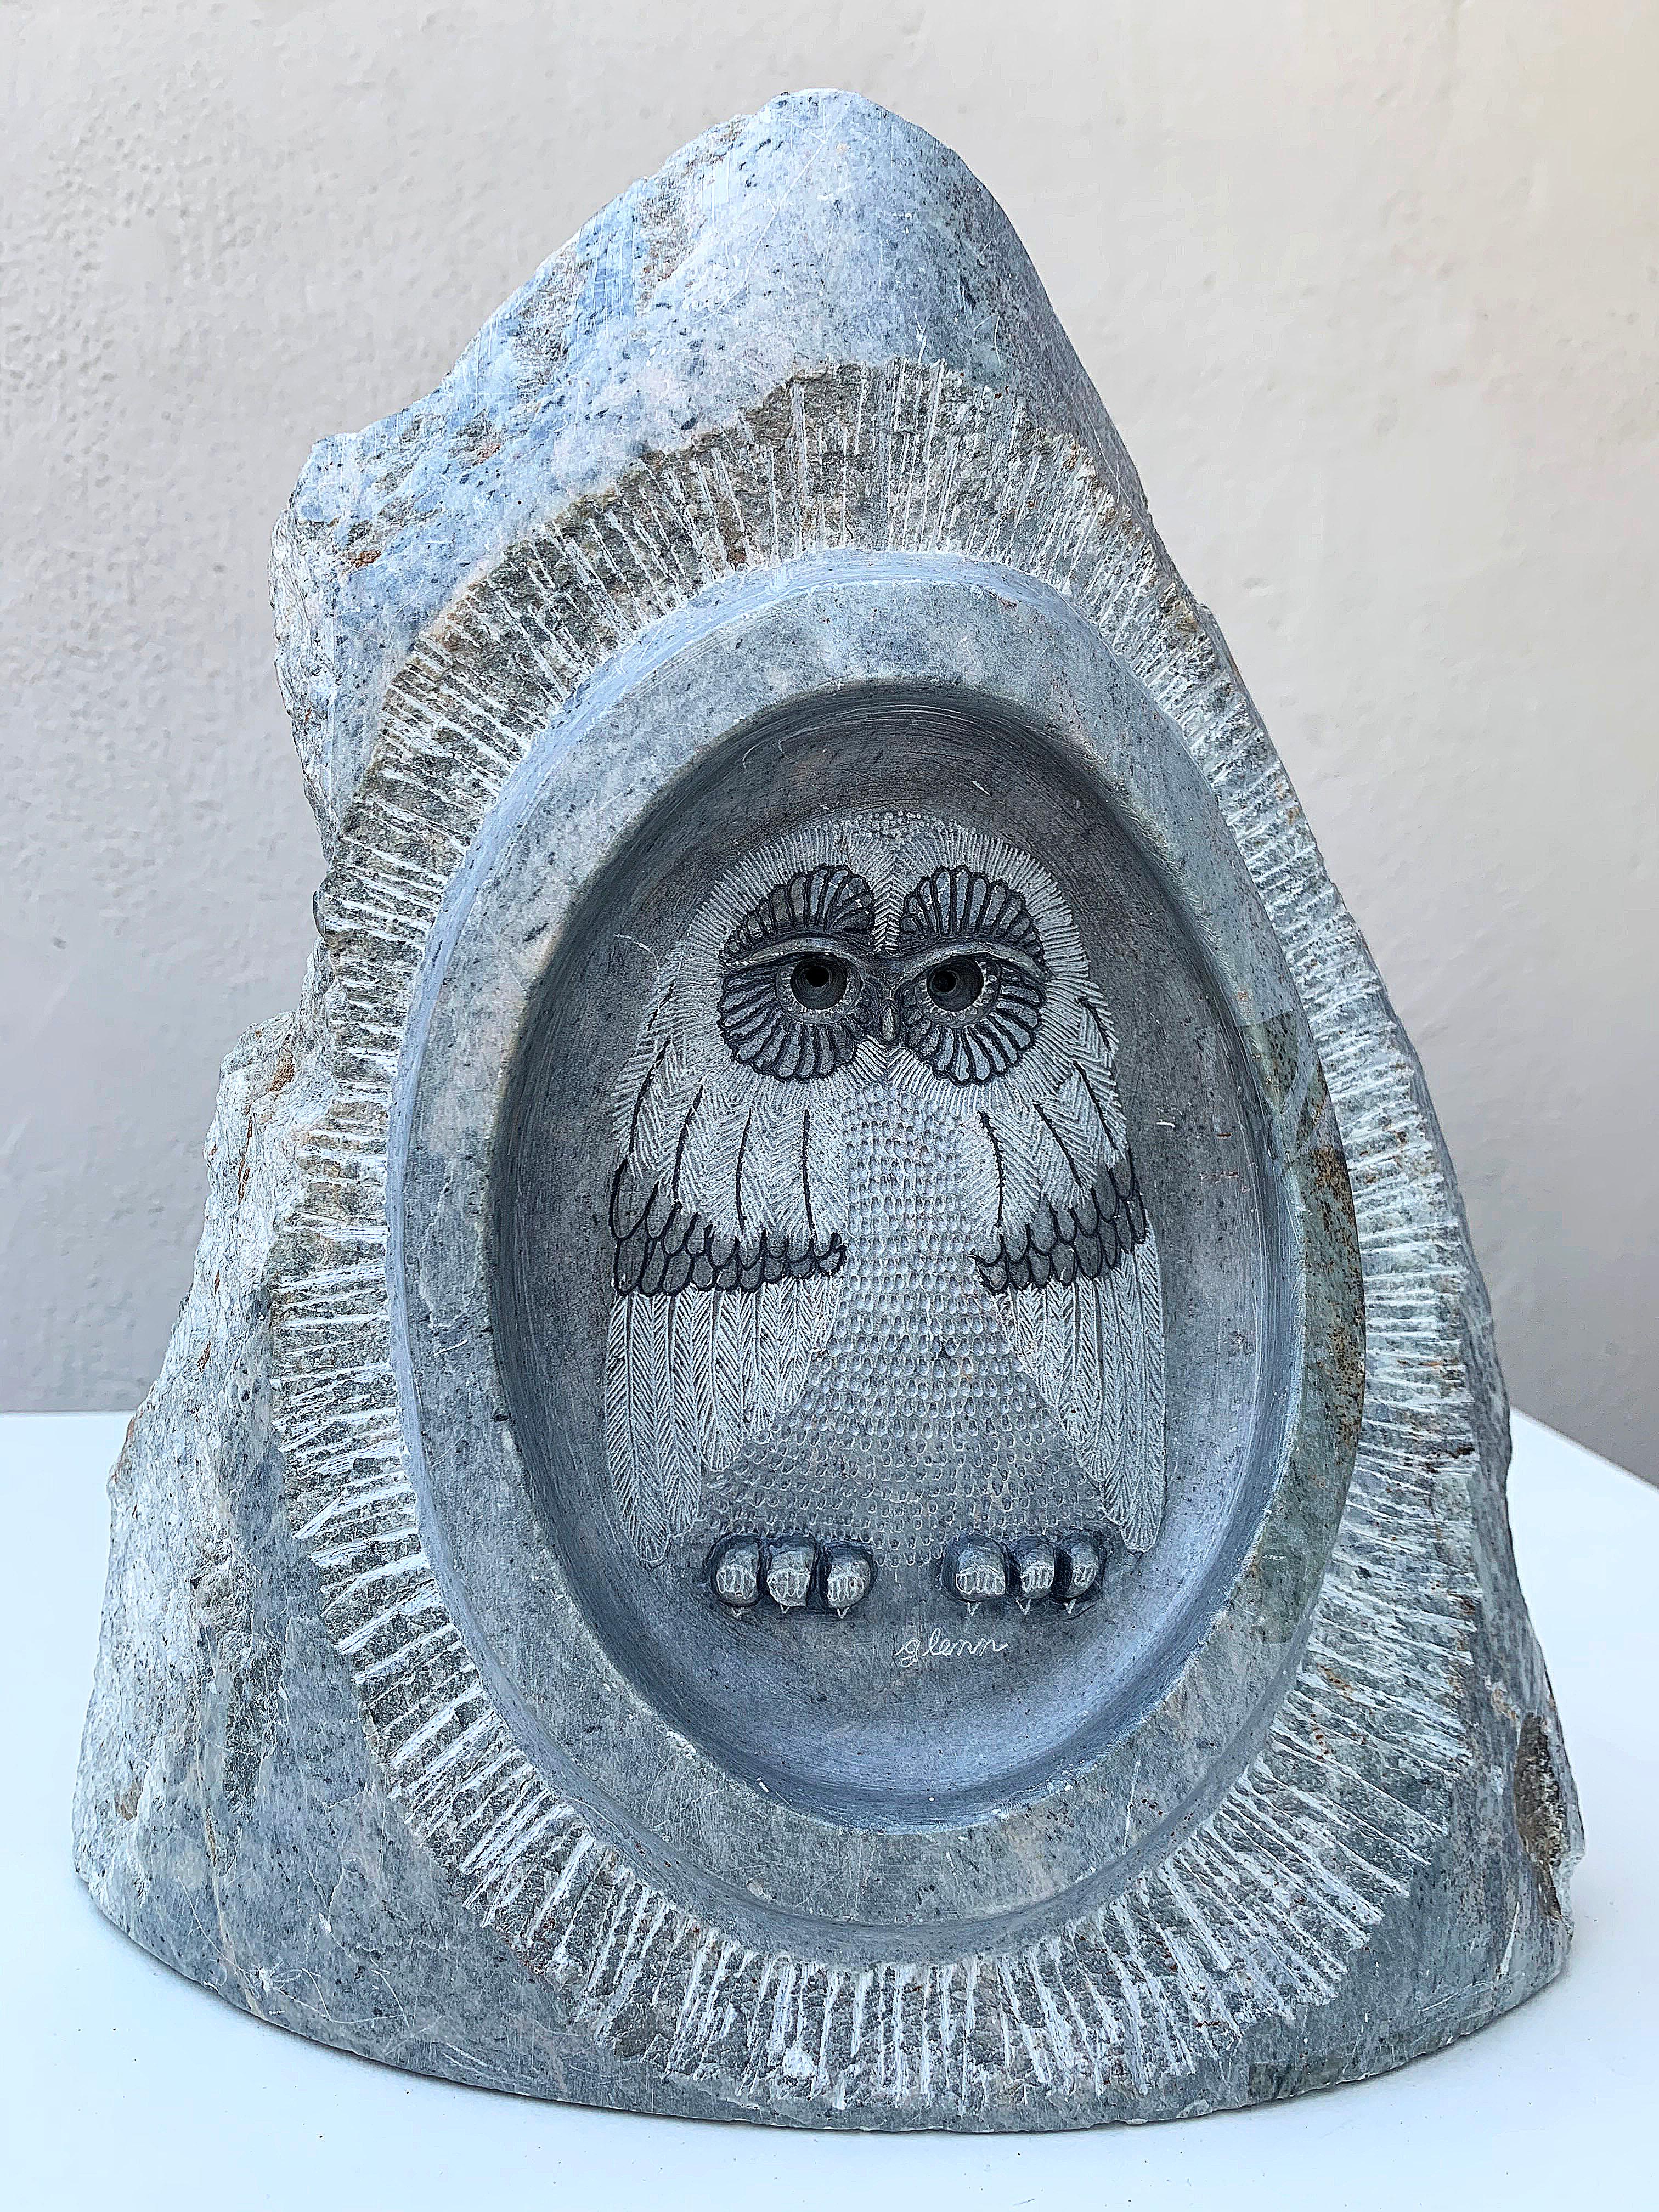 Carved Stone Owl Sculpture #143 - Art by Glenn Heath